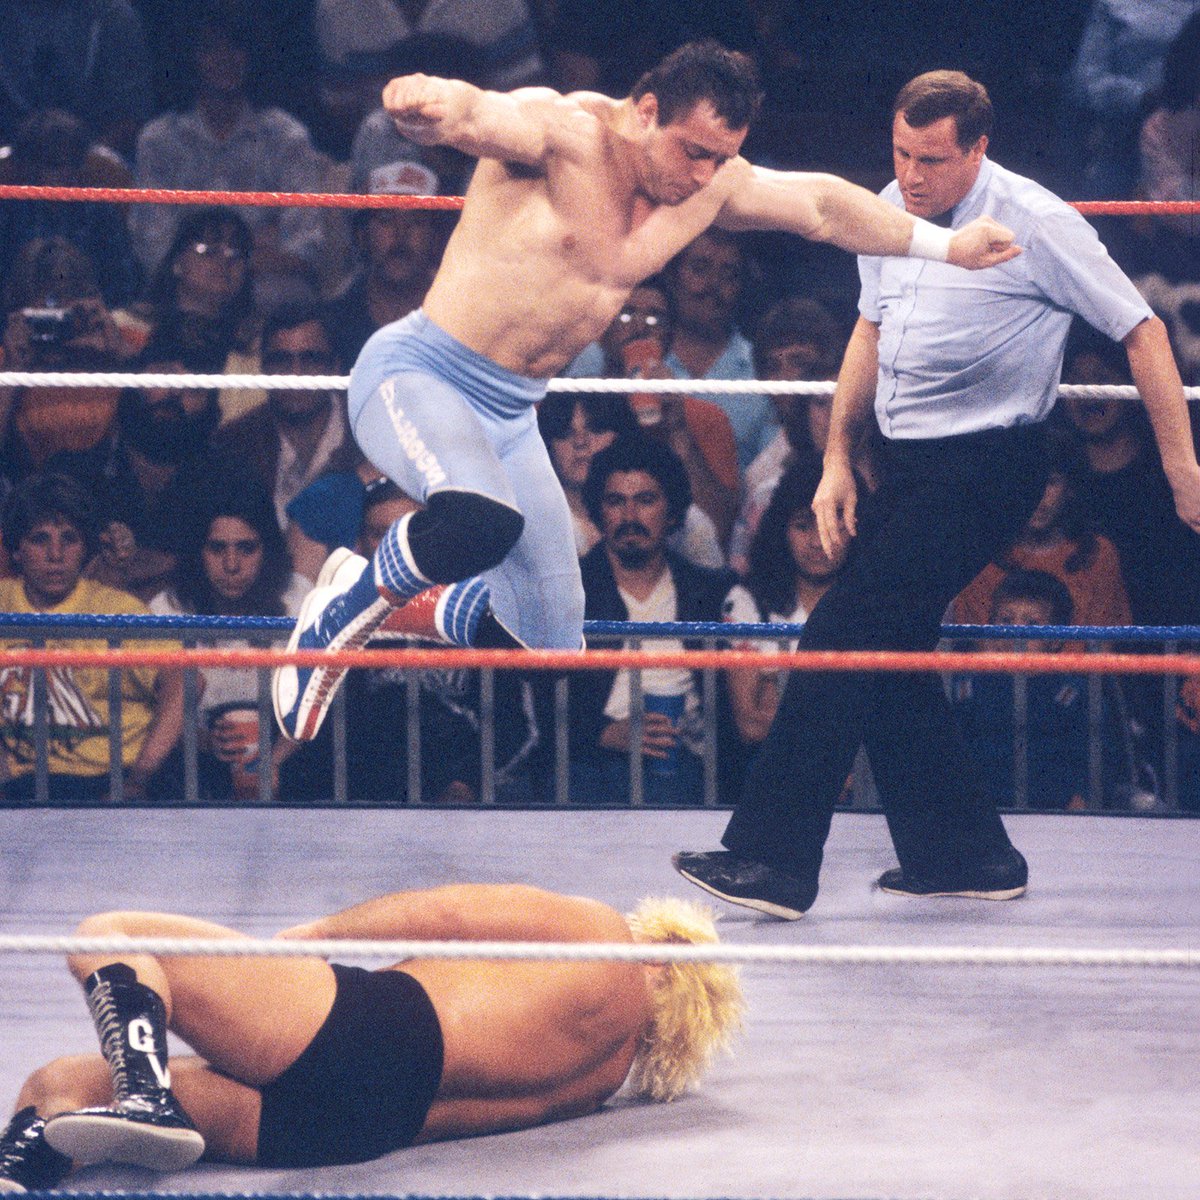 📸 WWF Action Shot! #WWF #WWE #Wrestling #DynamiteKid